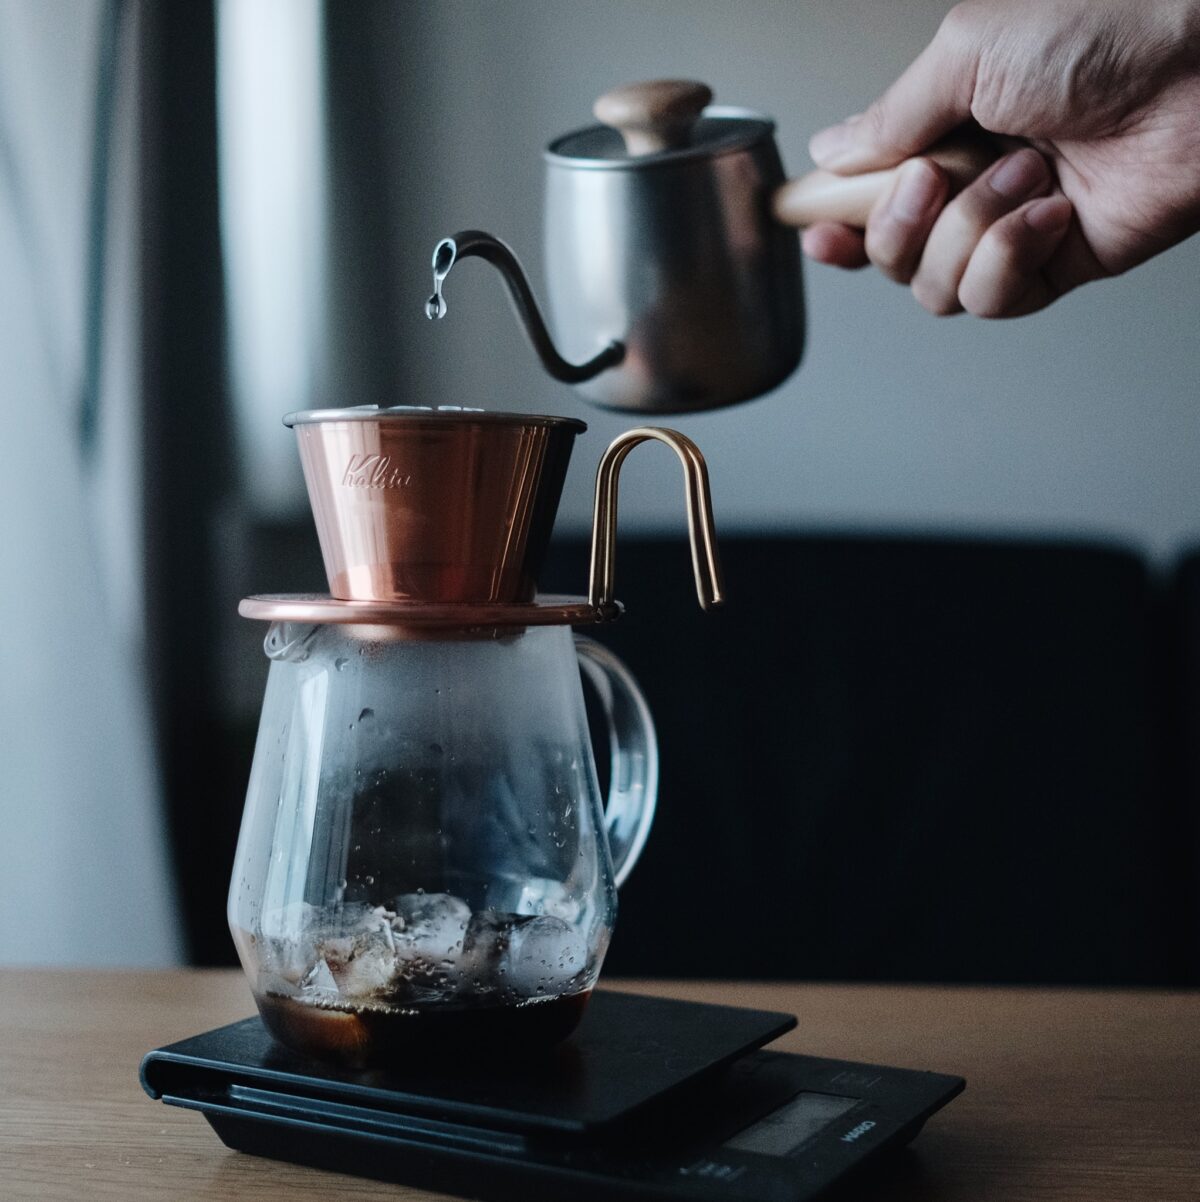 Miyaco single drip coffee kettle